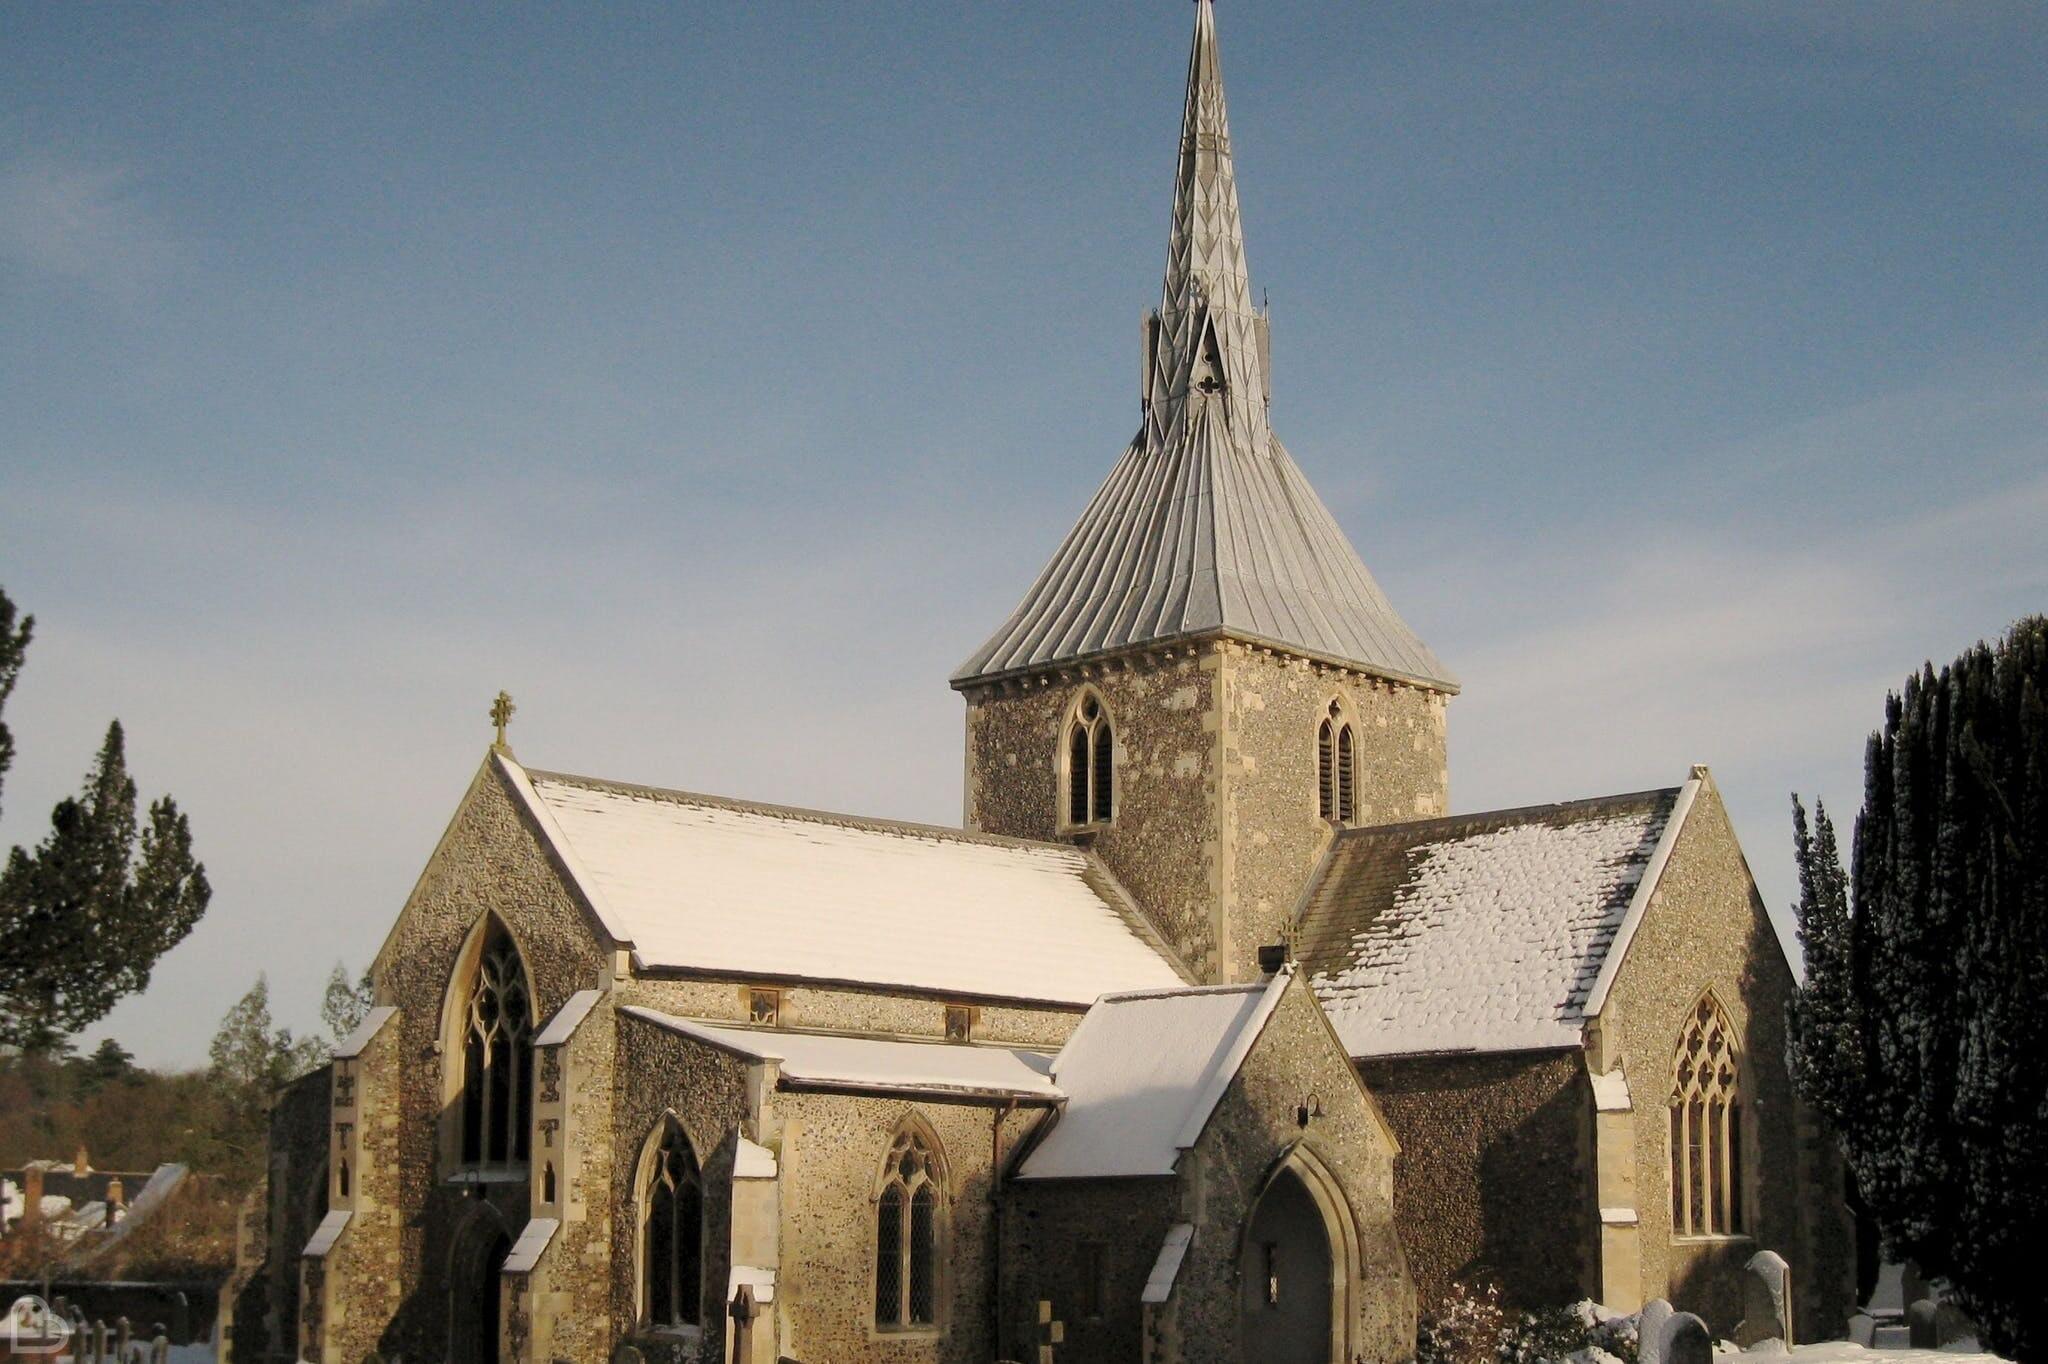 Church wedding venue in the UK